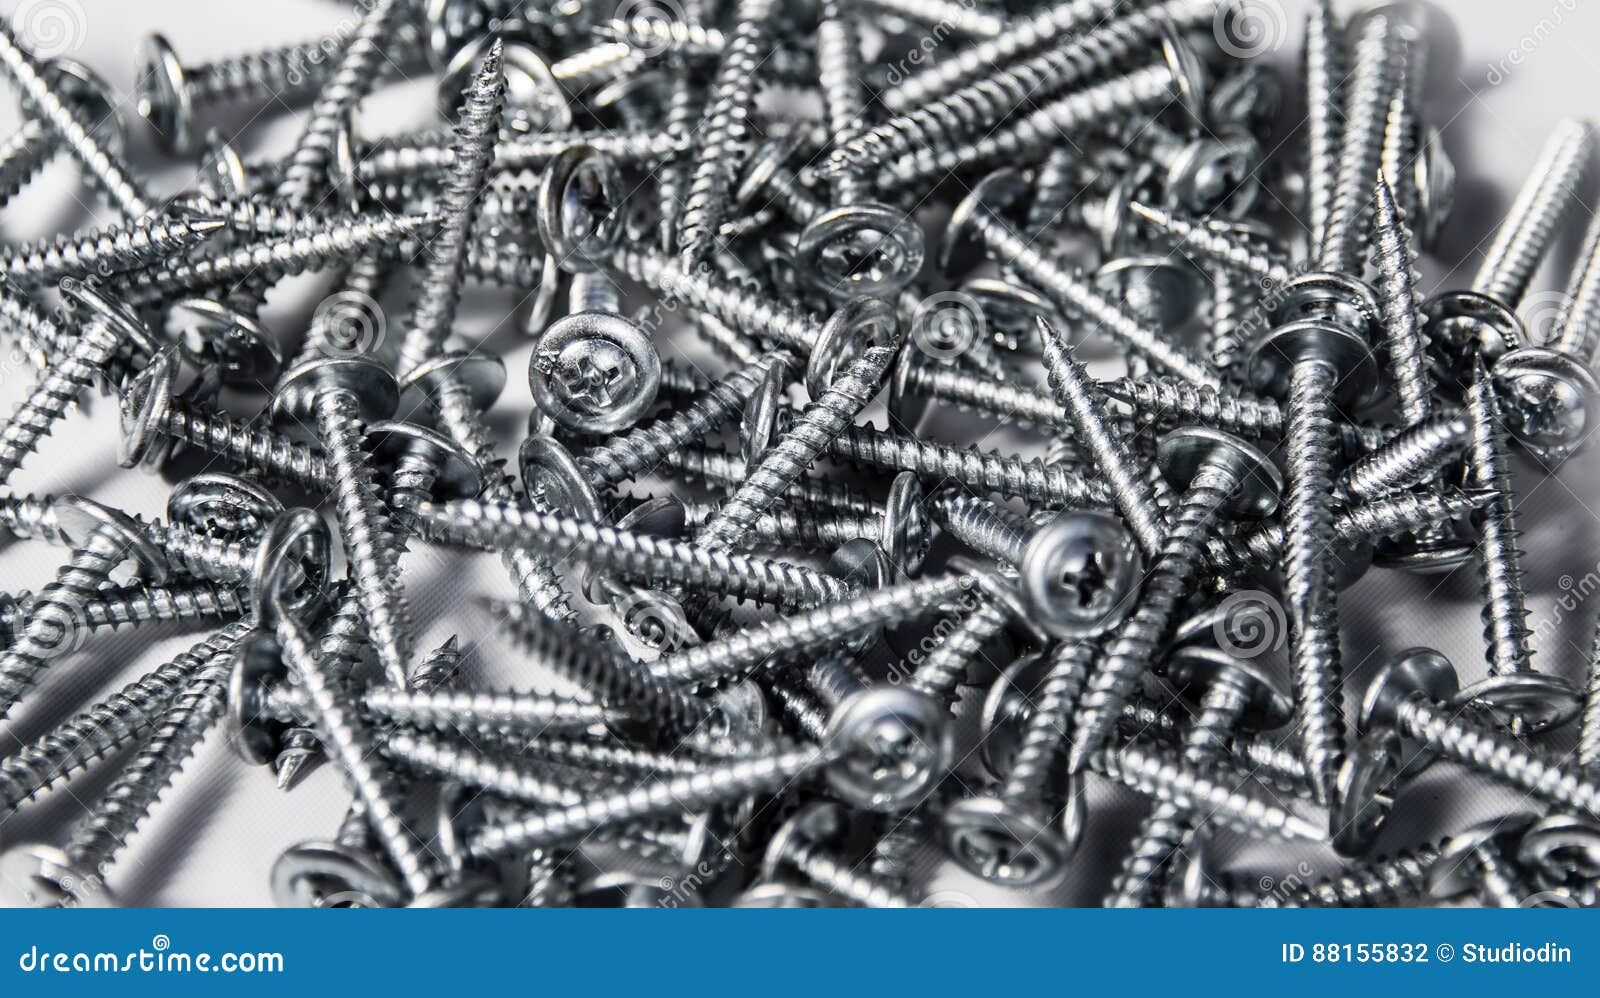 tapping screws made od steel, metal screw, iron screw, chrome screw, as a background, wood